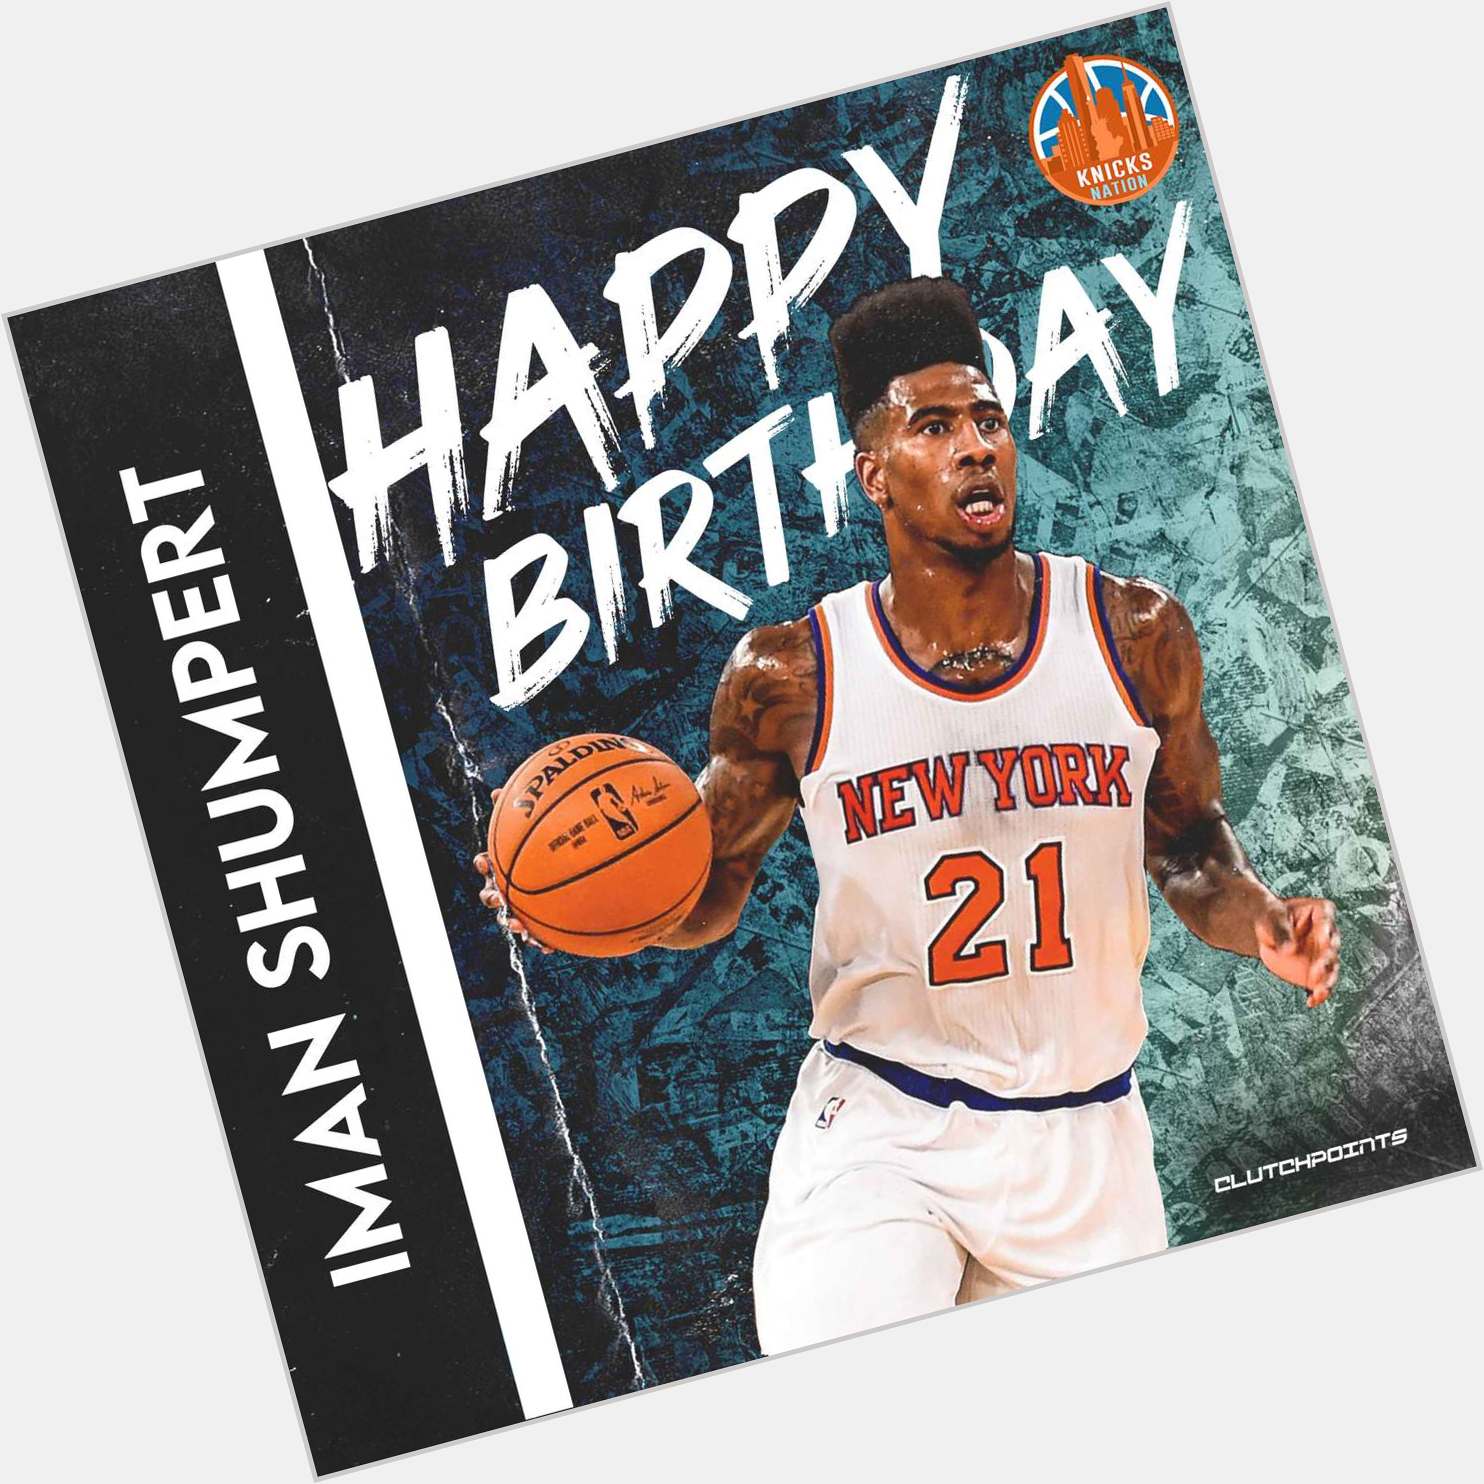 Knicks Nation, let us all wish Iman Shumpert a very happy birthday! 